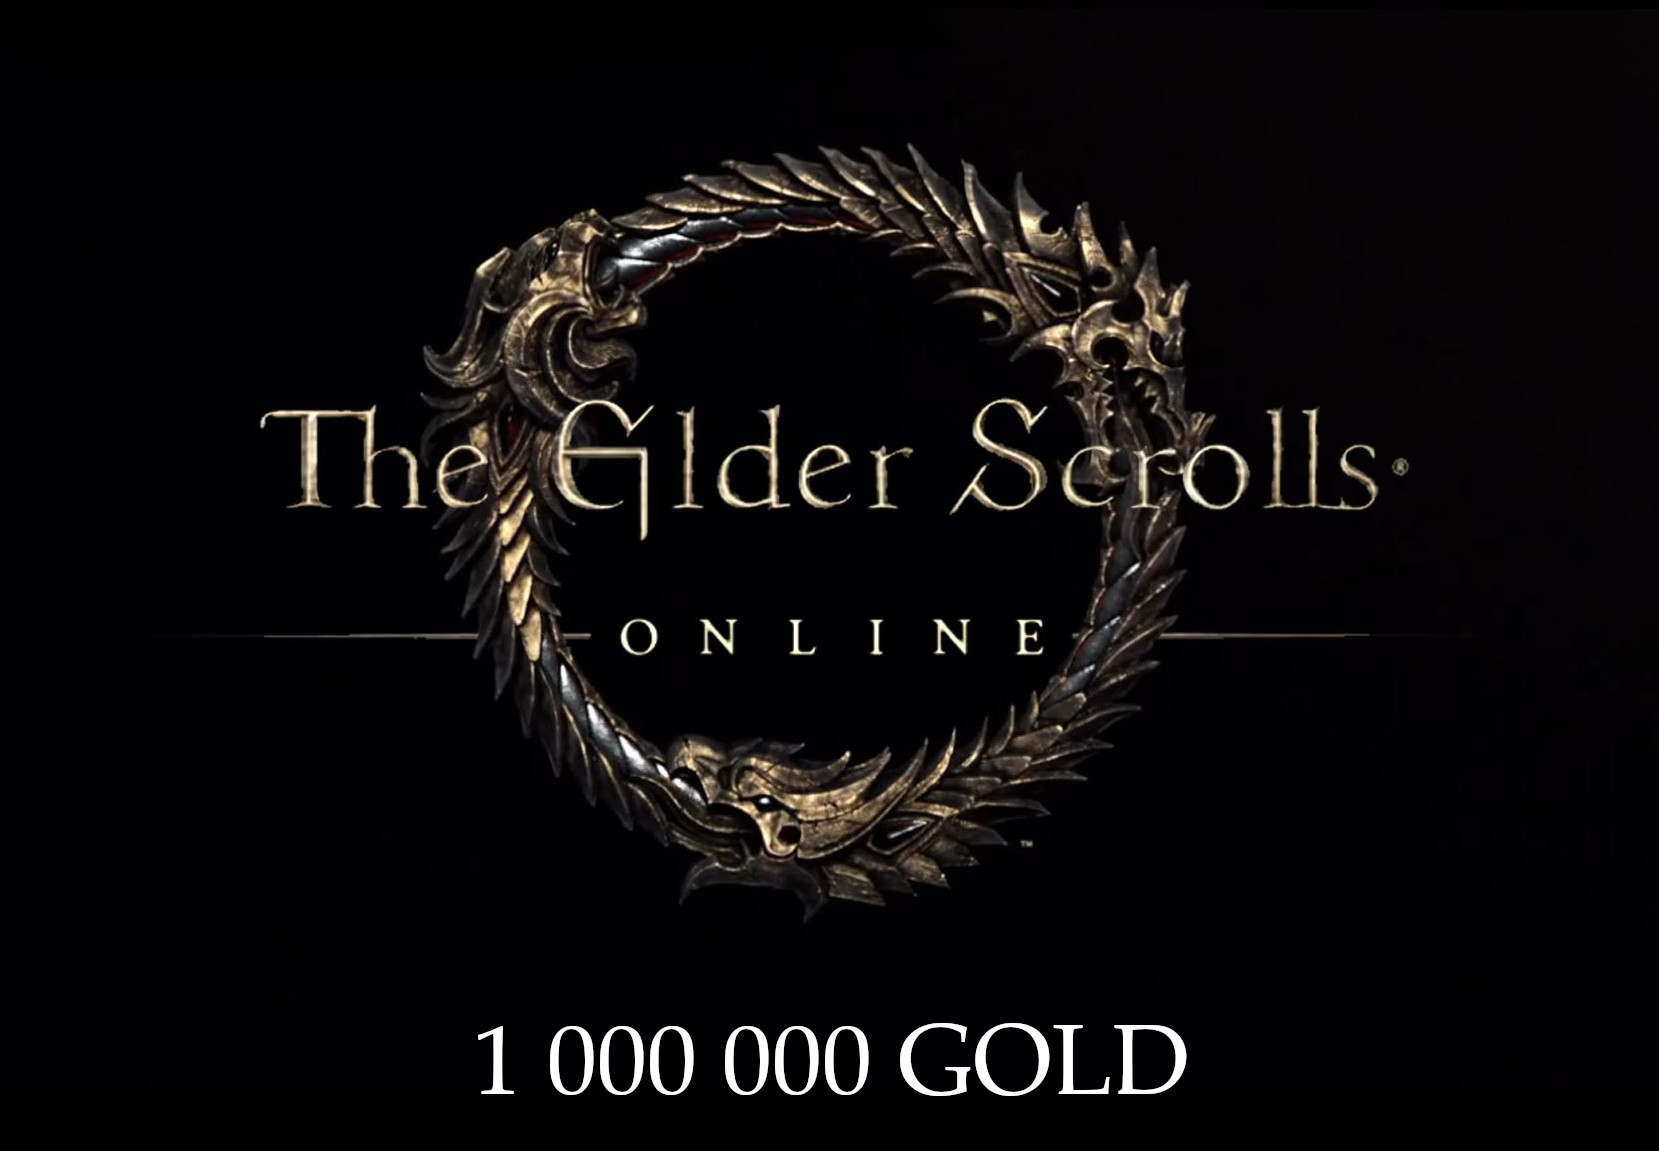 The Elder Scrolls Online - 1000k Gold - NORTH AMERICA XBOX One